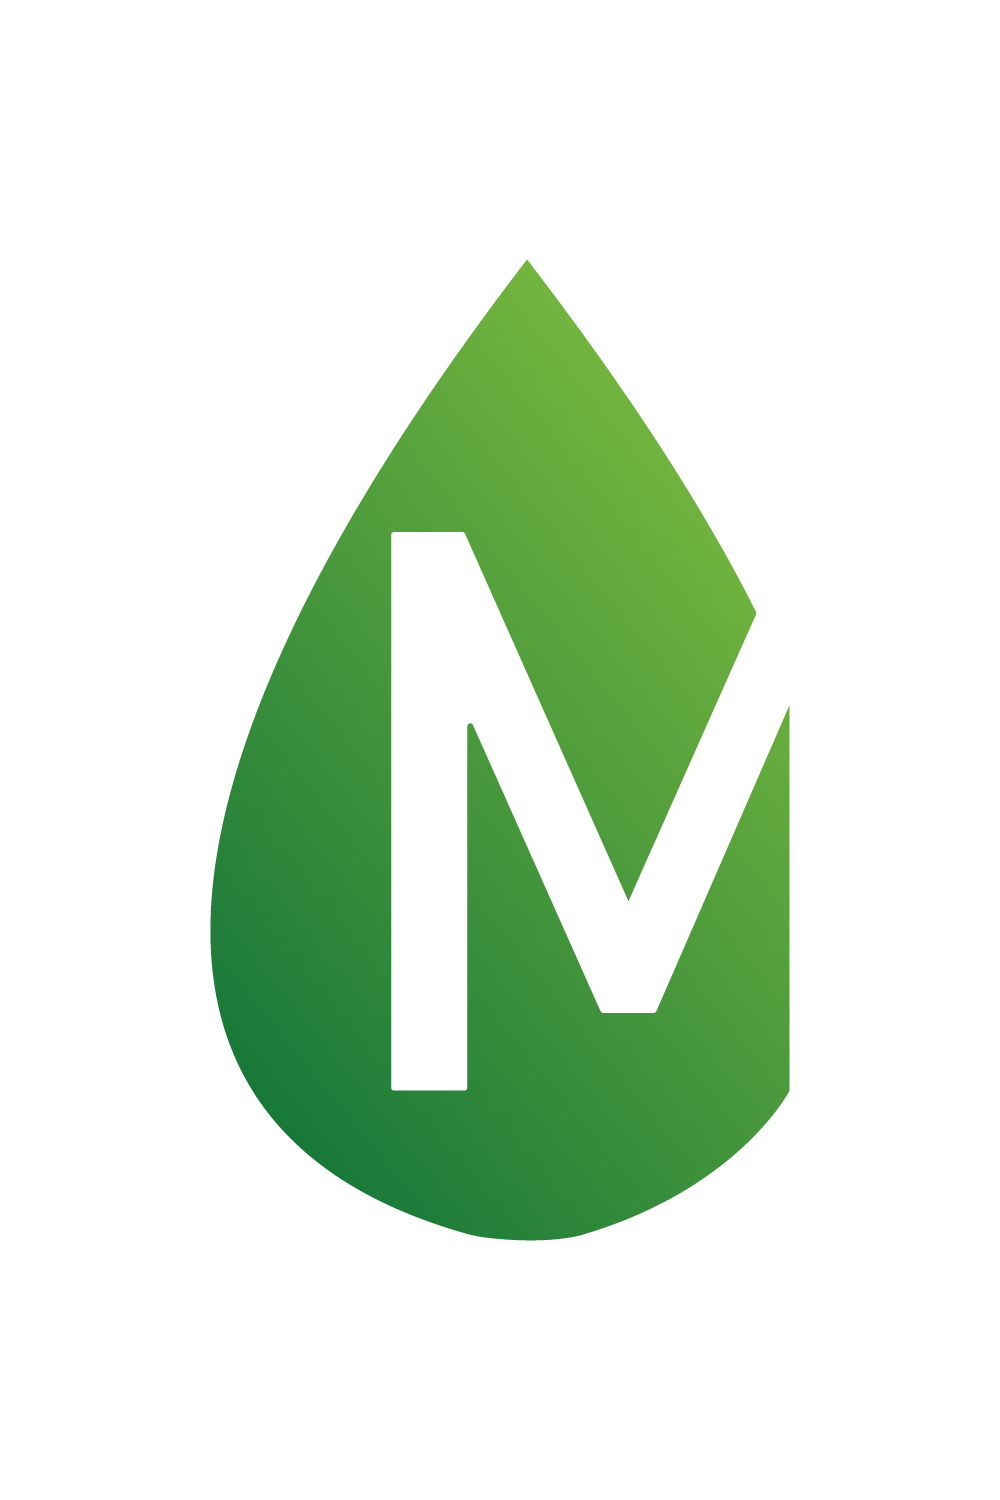 Initial M letters logo design vector images M Drop logo design M location logo best identity M green logo best icon pinterest preview image.